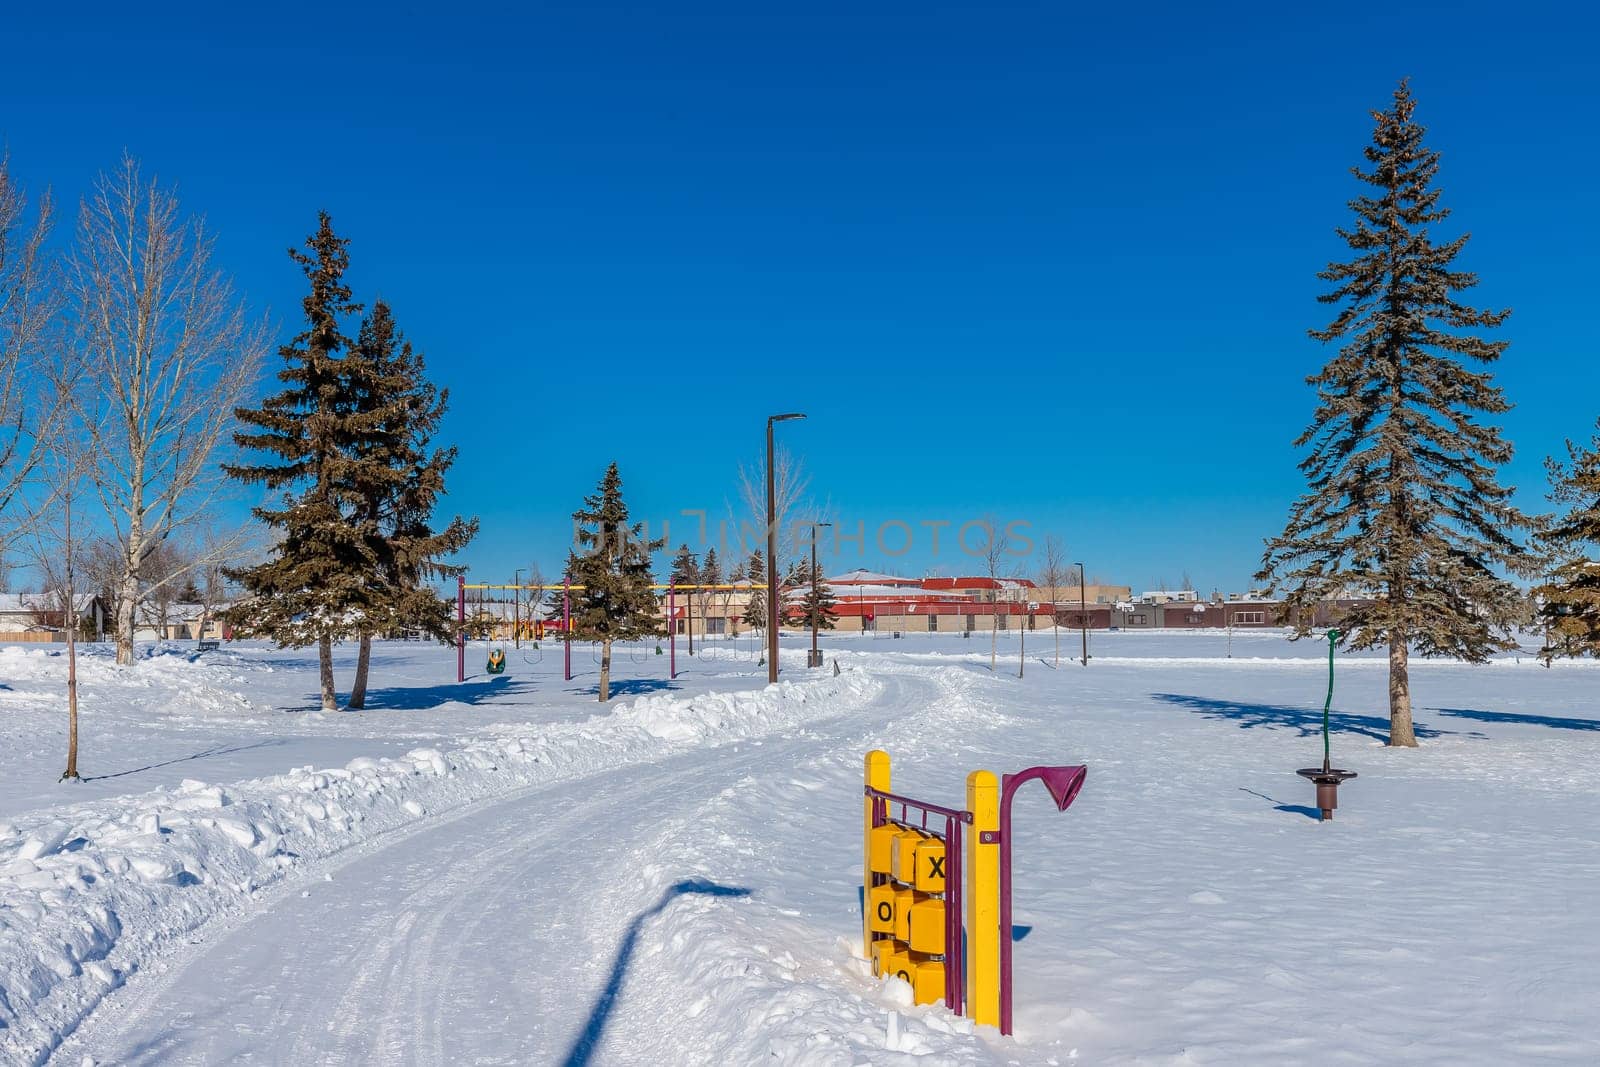 Dundonald Park in Saskatoon, Canada by sprokop